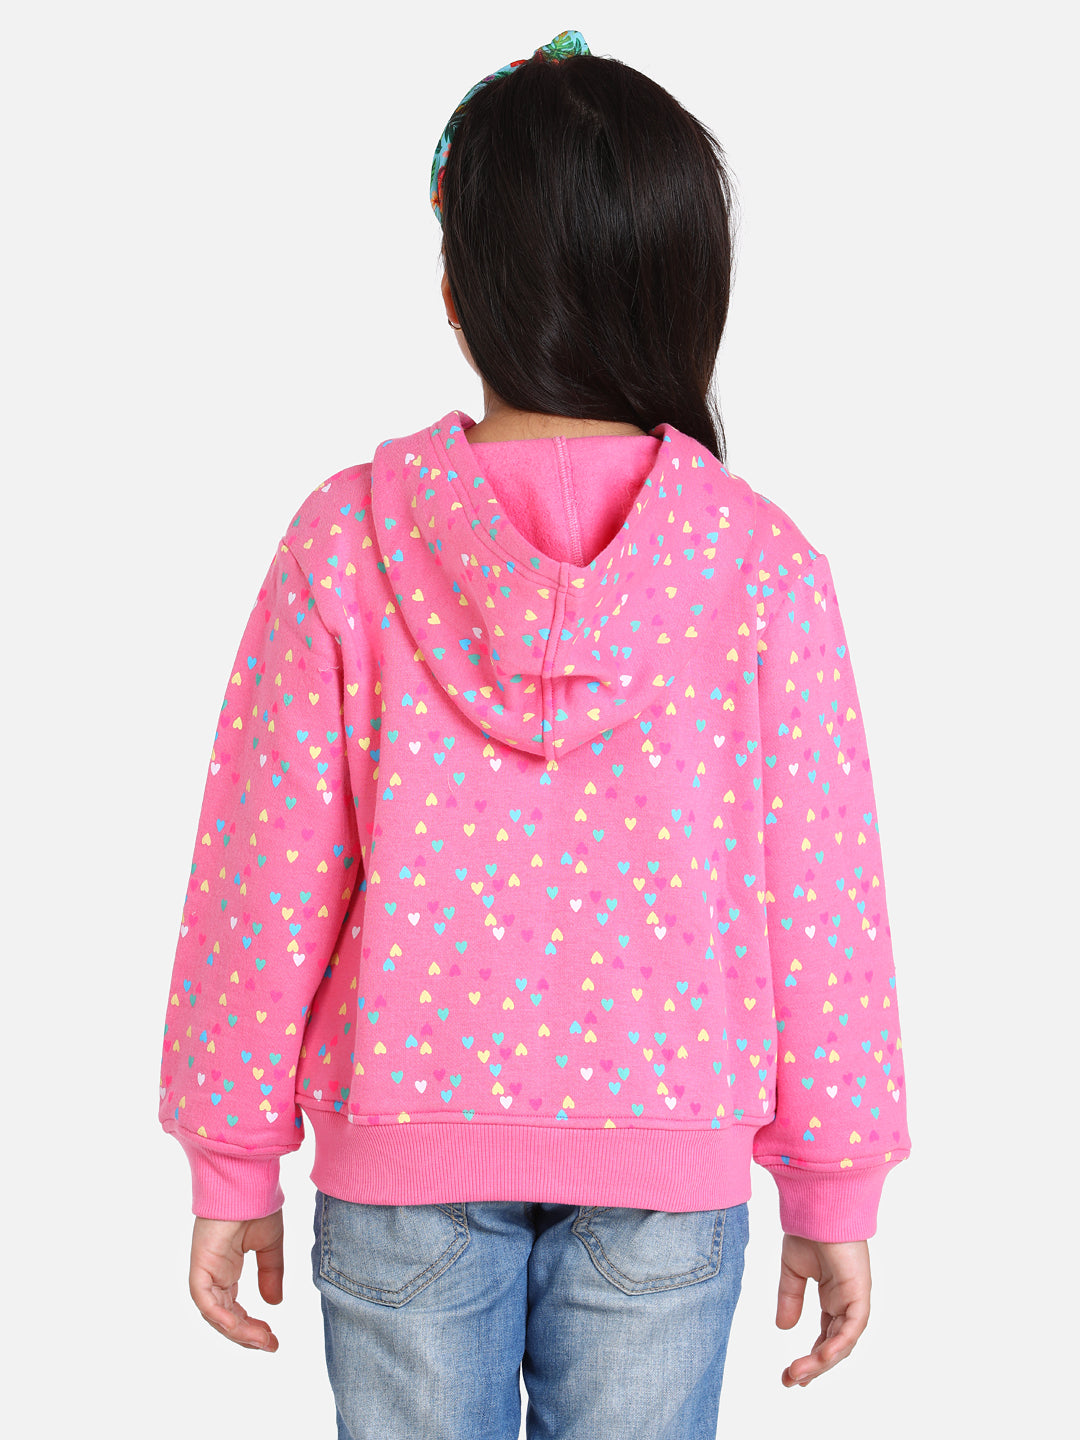 Girls Light Pink  Heart Printed Jacket with Hoodie